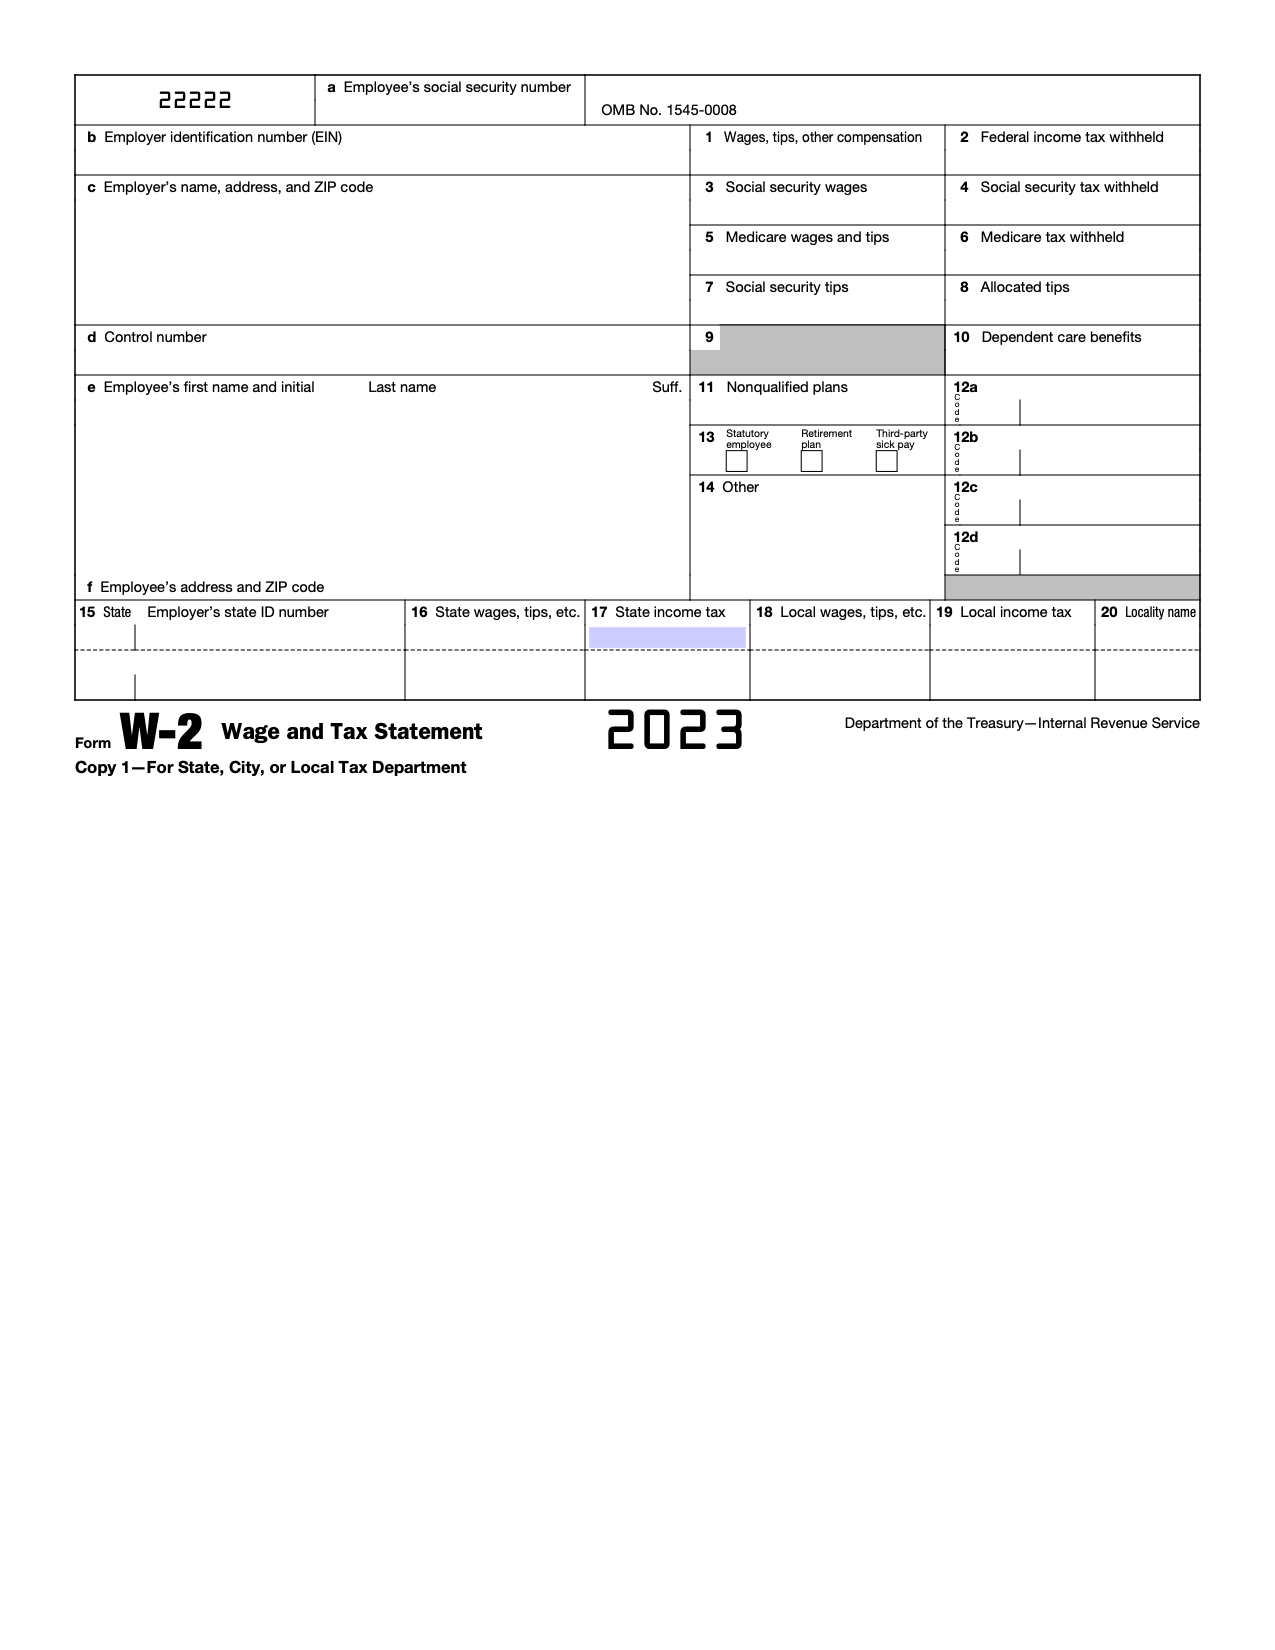 Free Irs Form W-2 | Wage And Tax Statement - Pdf – Eforms regarding Irs W2 Form